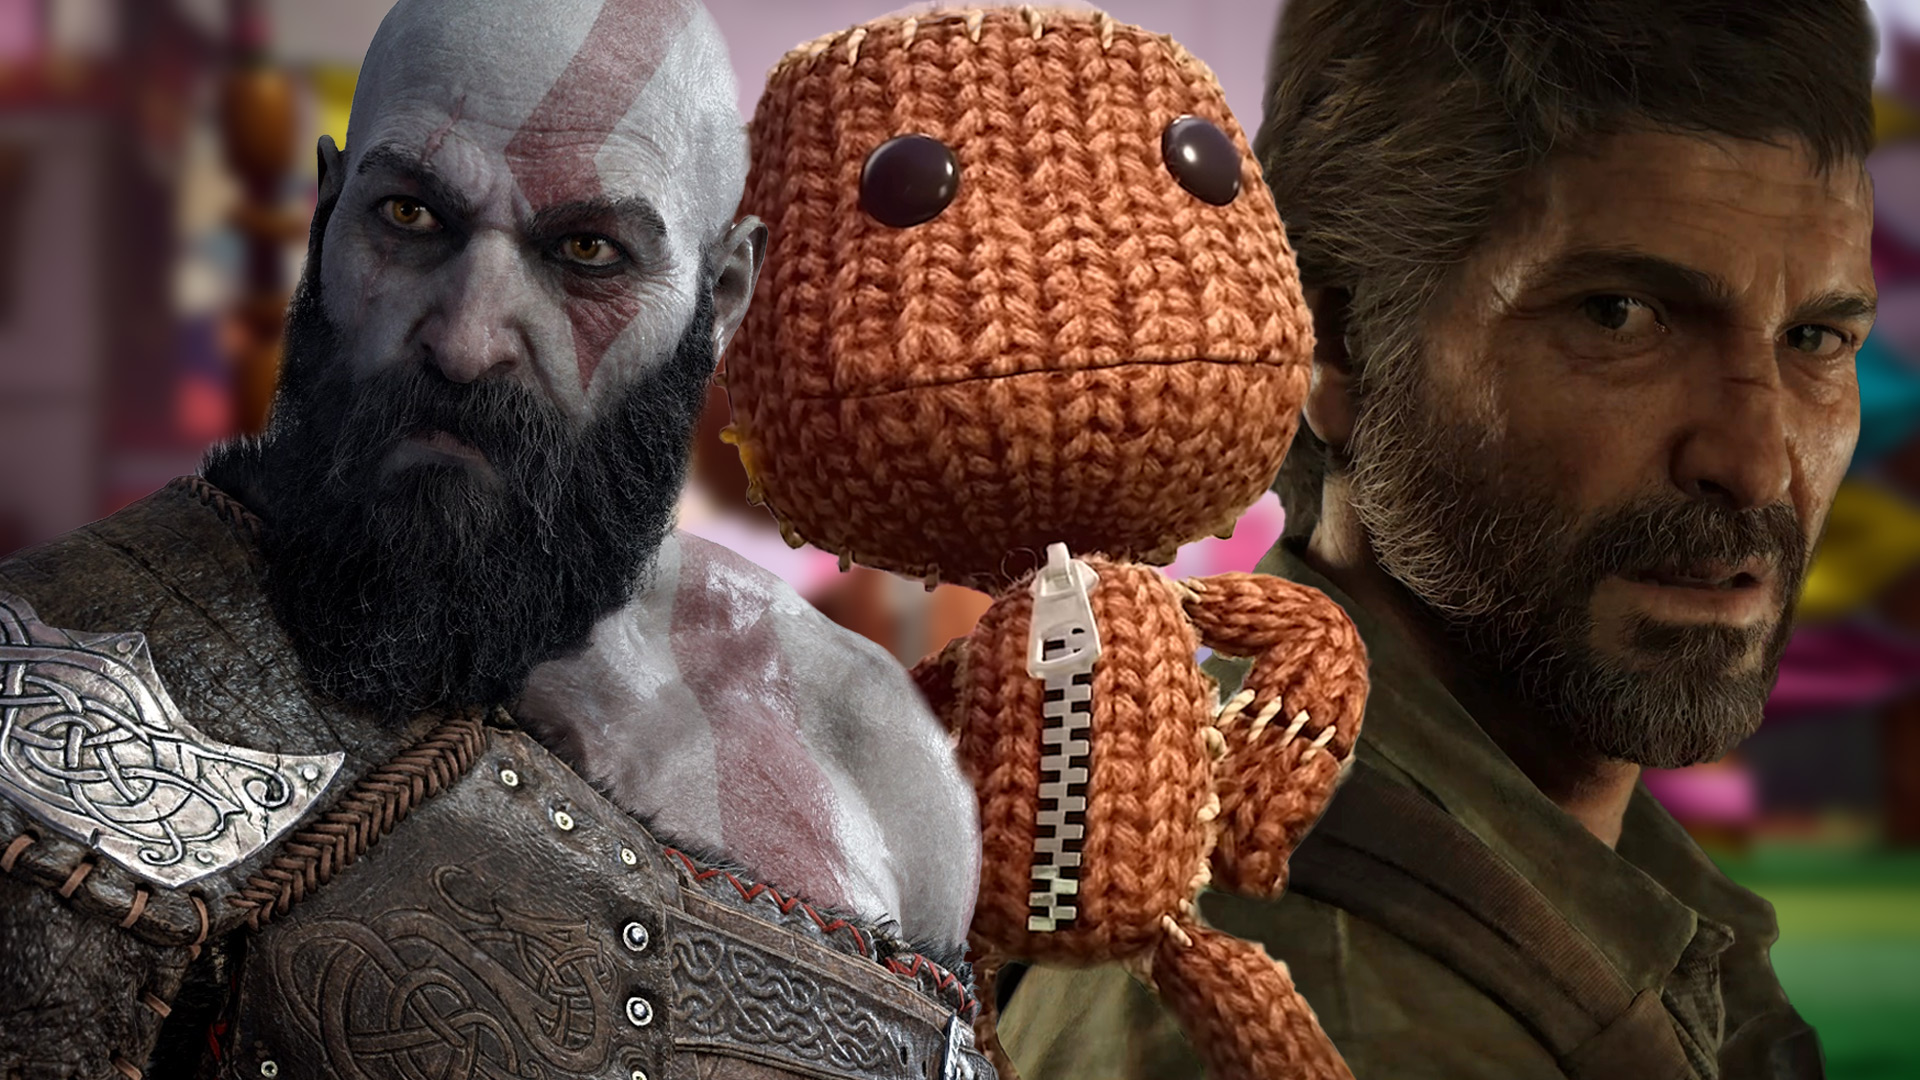 PlayStation Showcase 2021 Trailer Round-Up - KOTOR Remake, God of War:  Ragnarok & More 